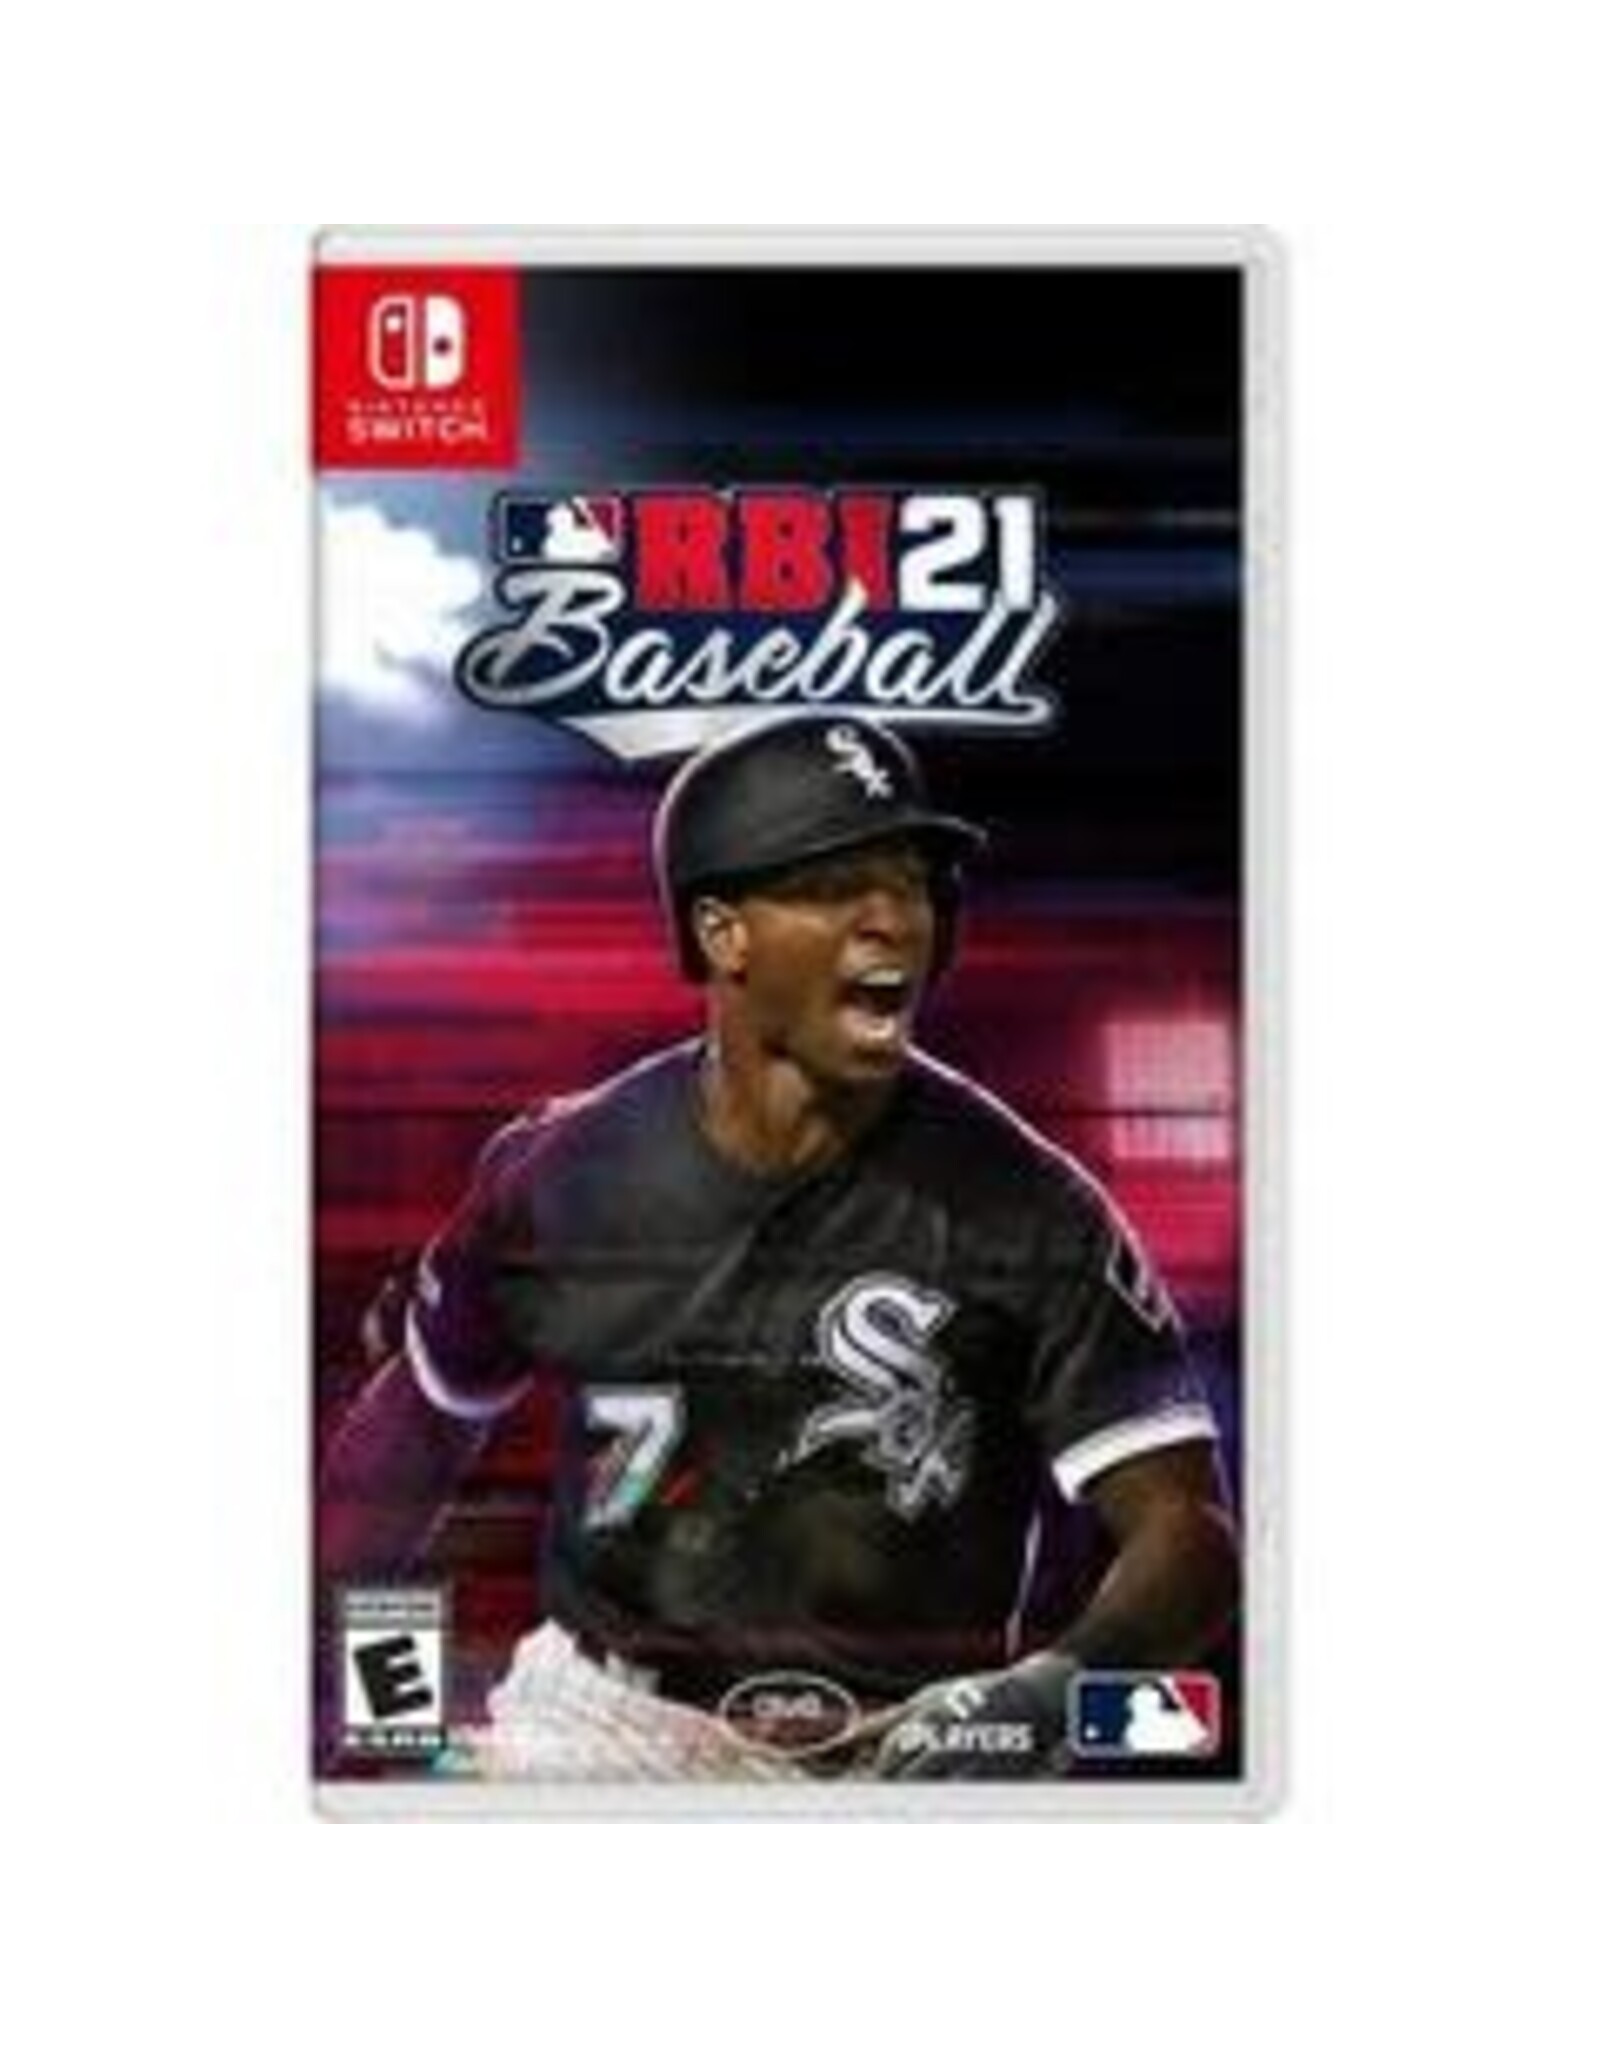 Nintendo Switch RBI Baseball 21 (Used)